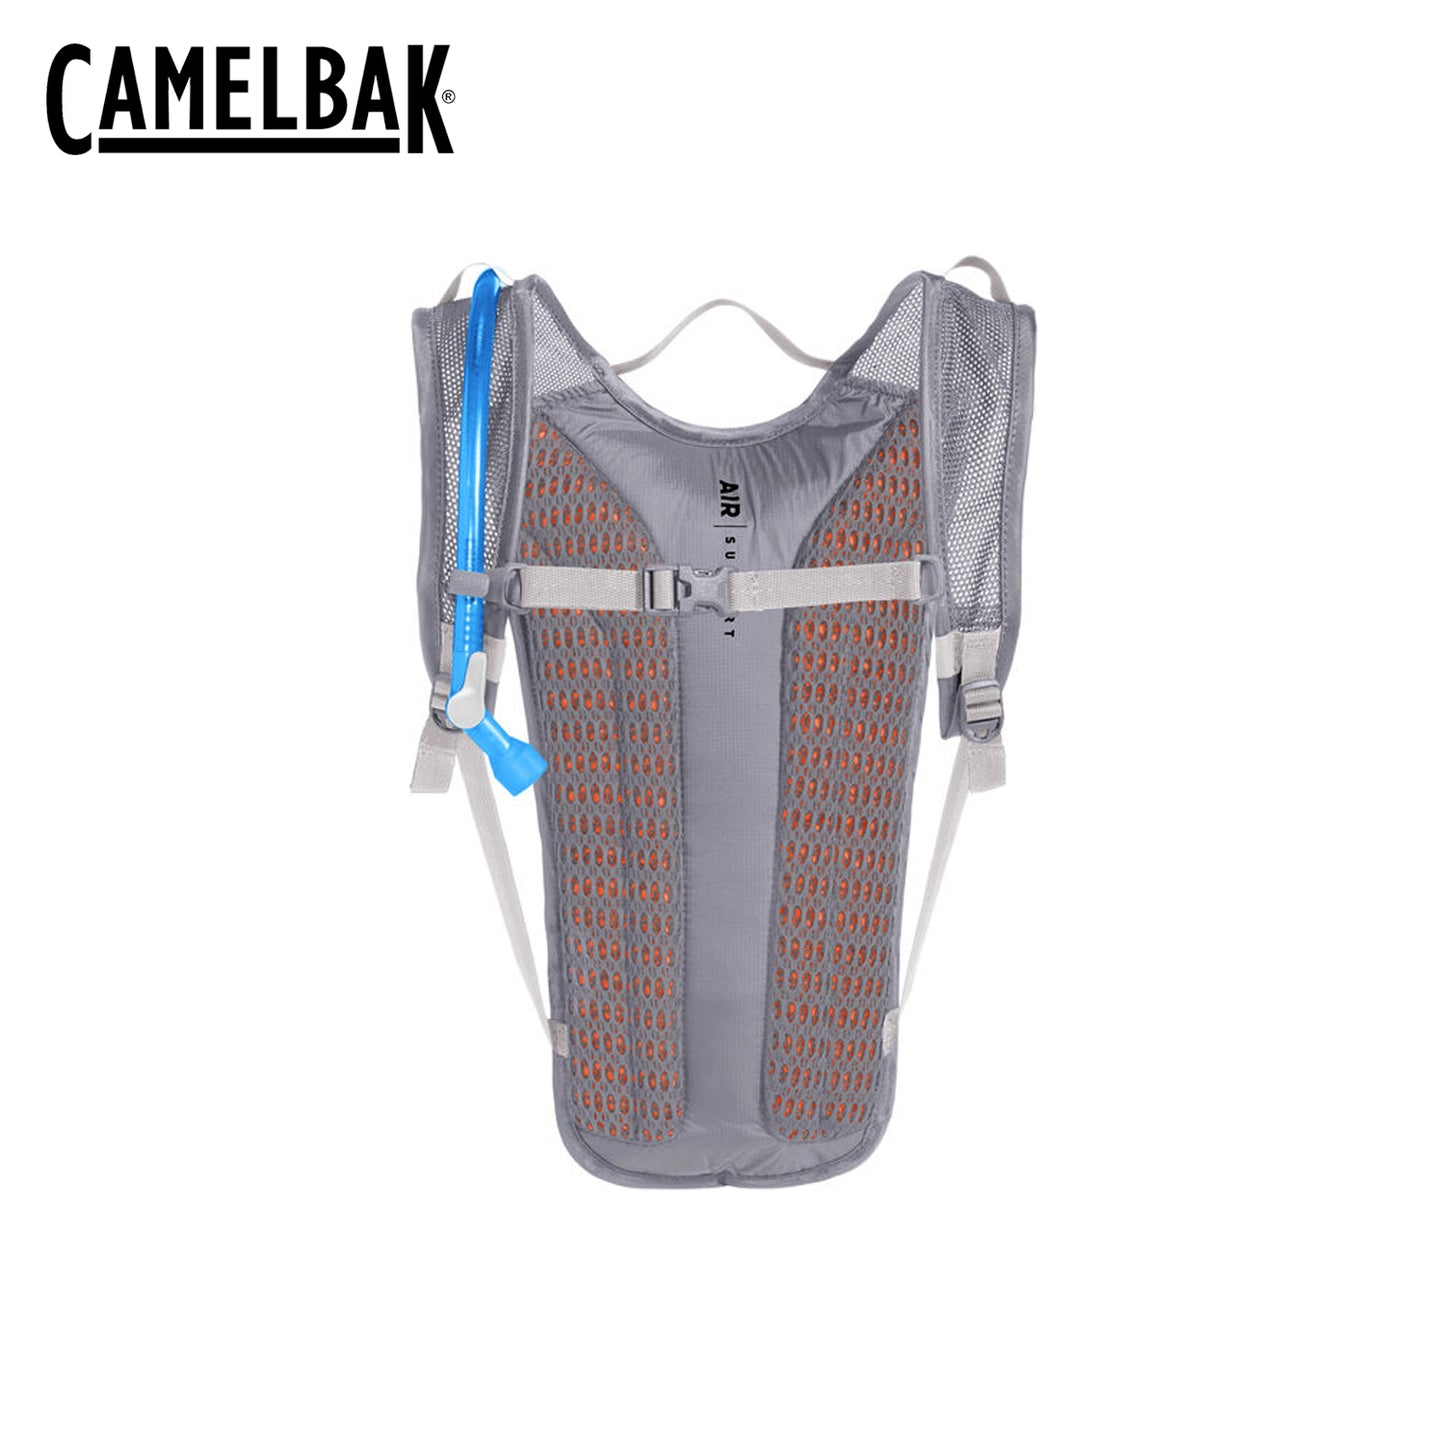 CamelBak Classic Light 70oz Hydration Pack - Gunmetal/Hydro